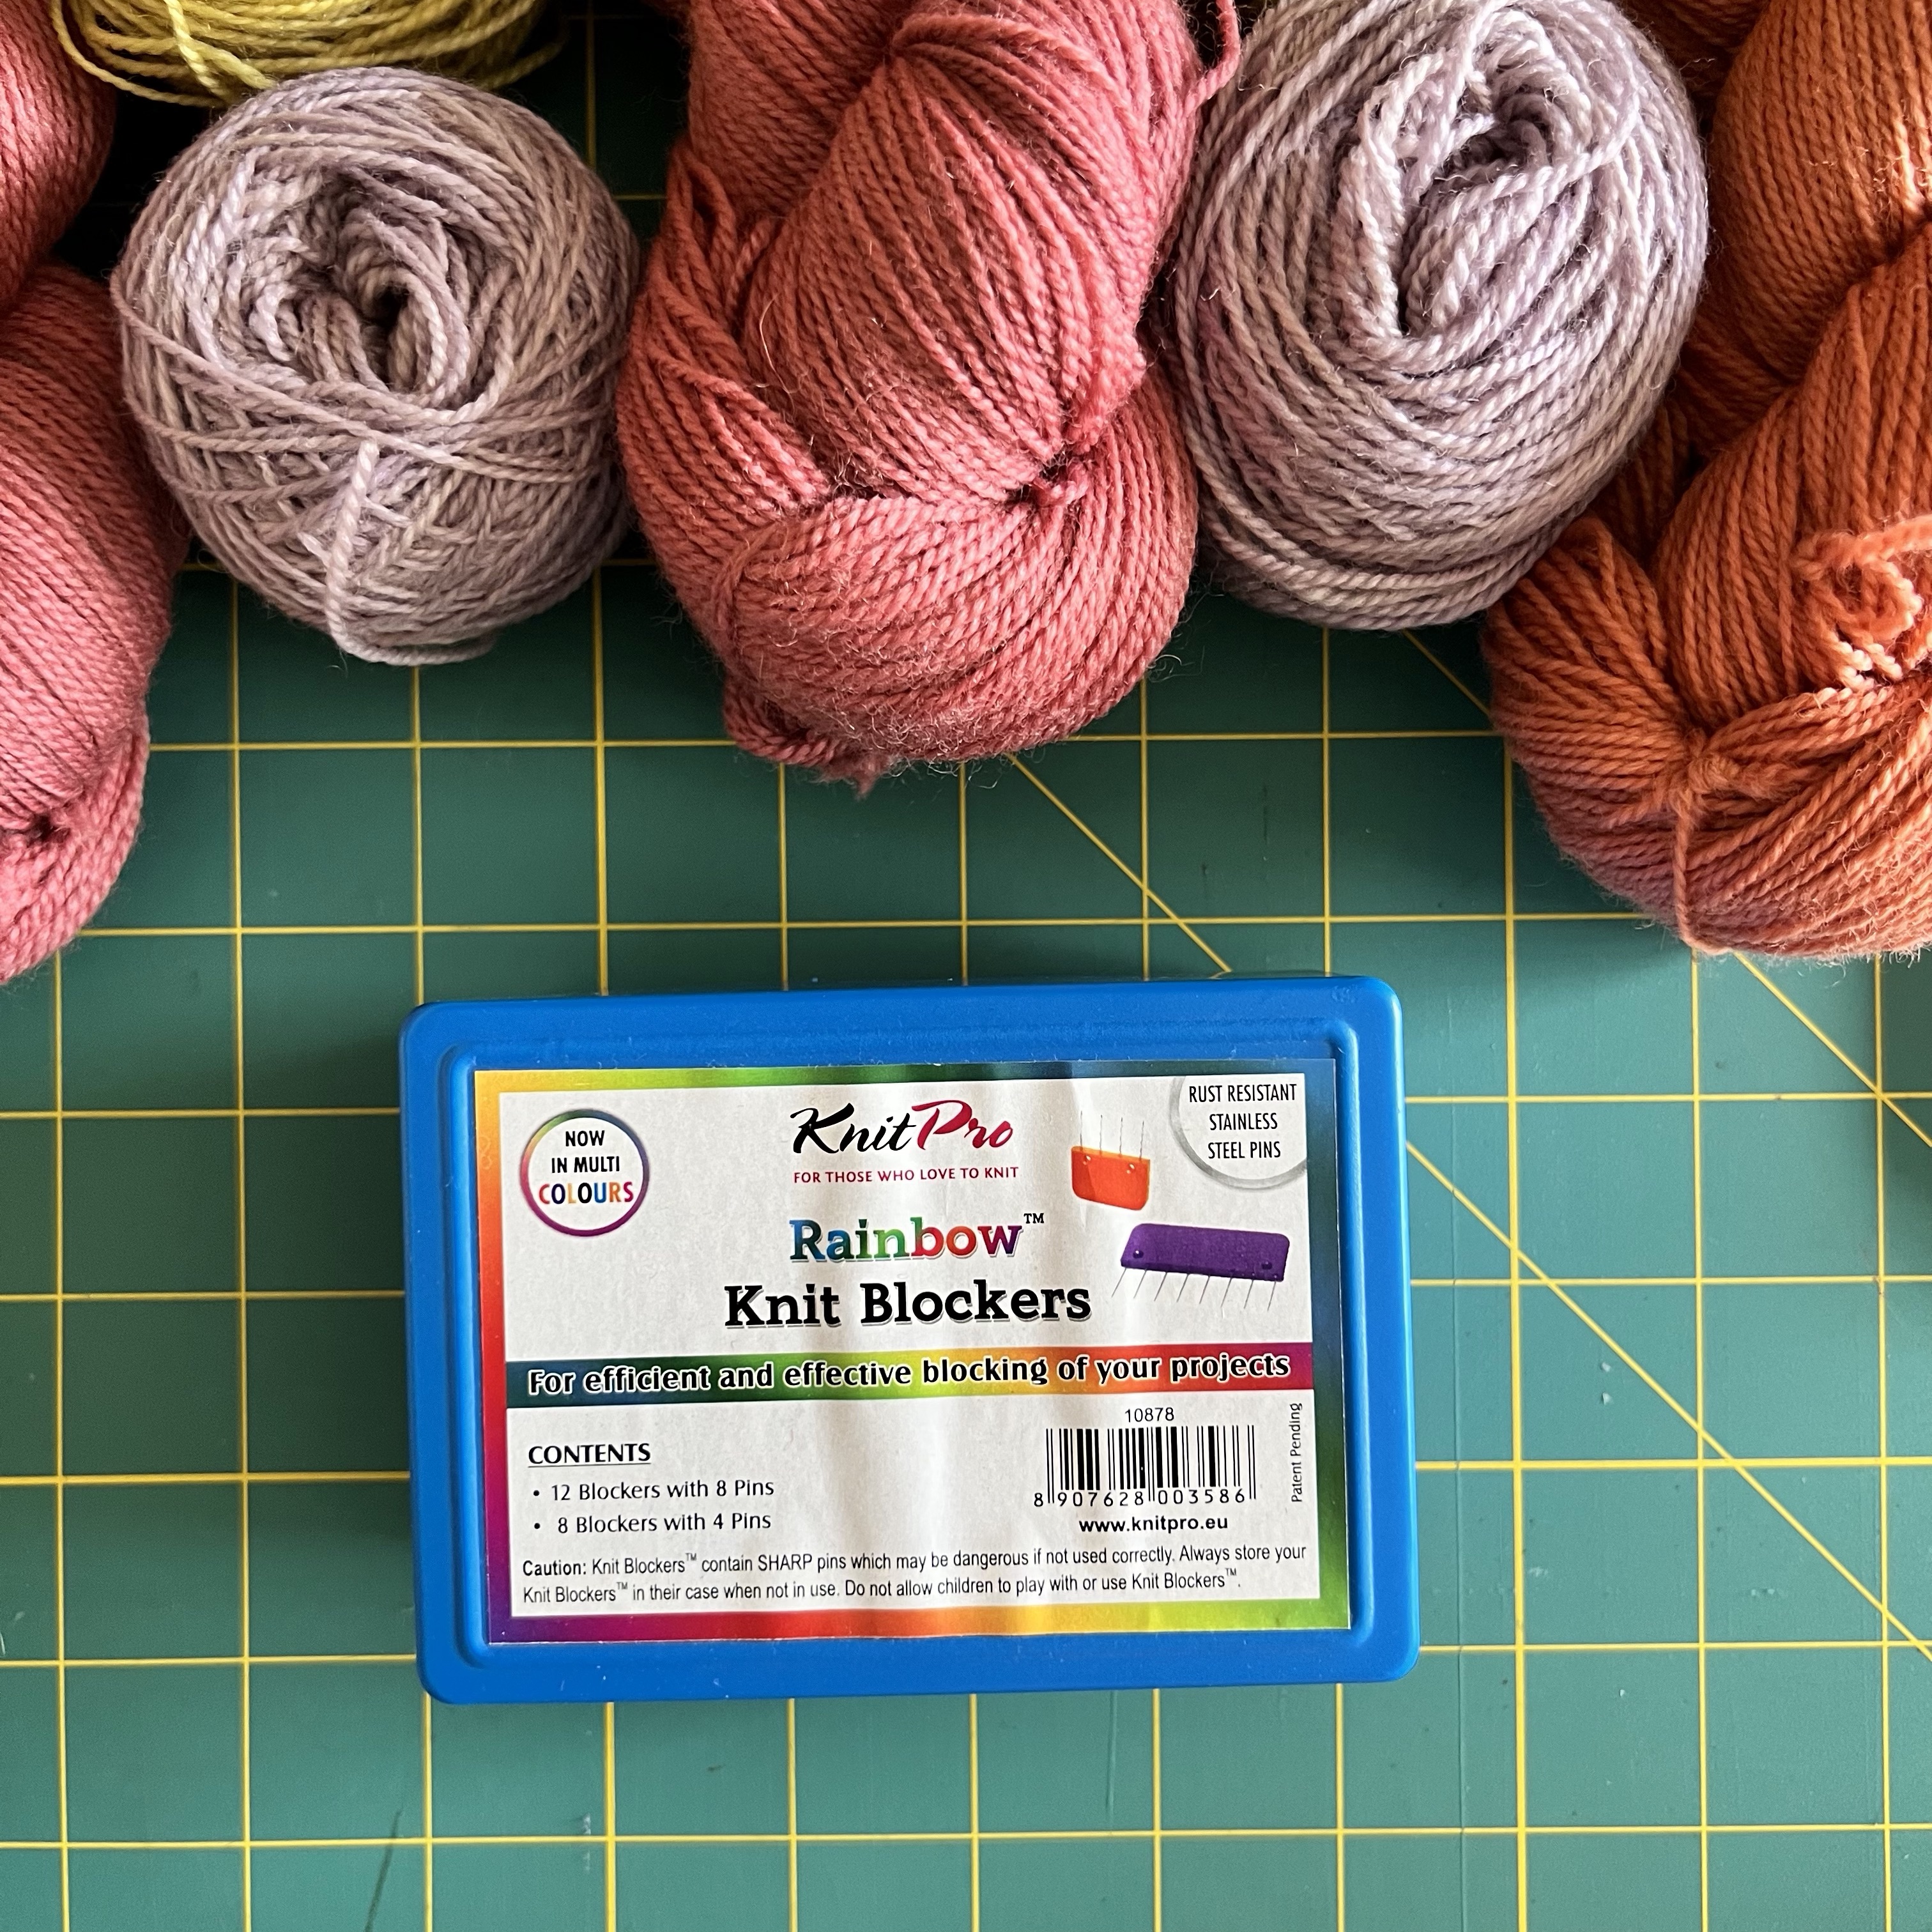 Rainbow Knit Blockers | Knit Pro